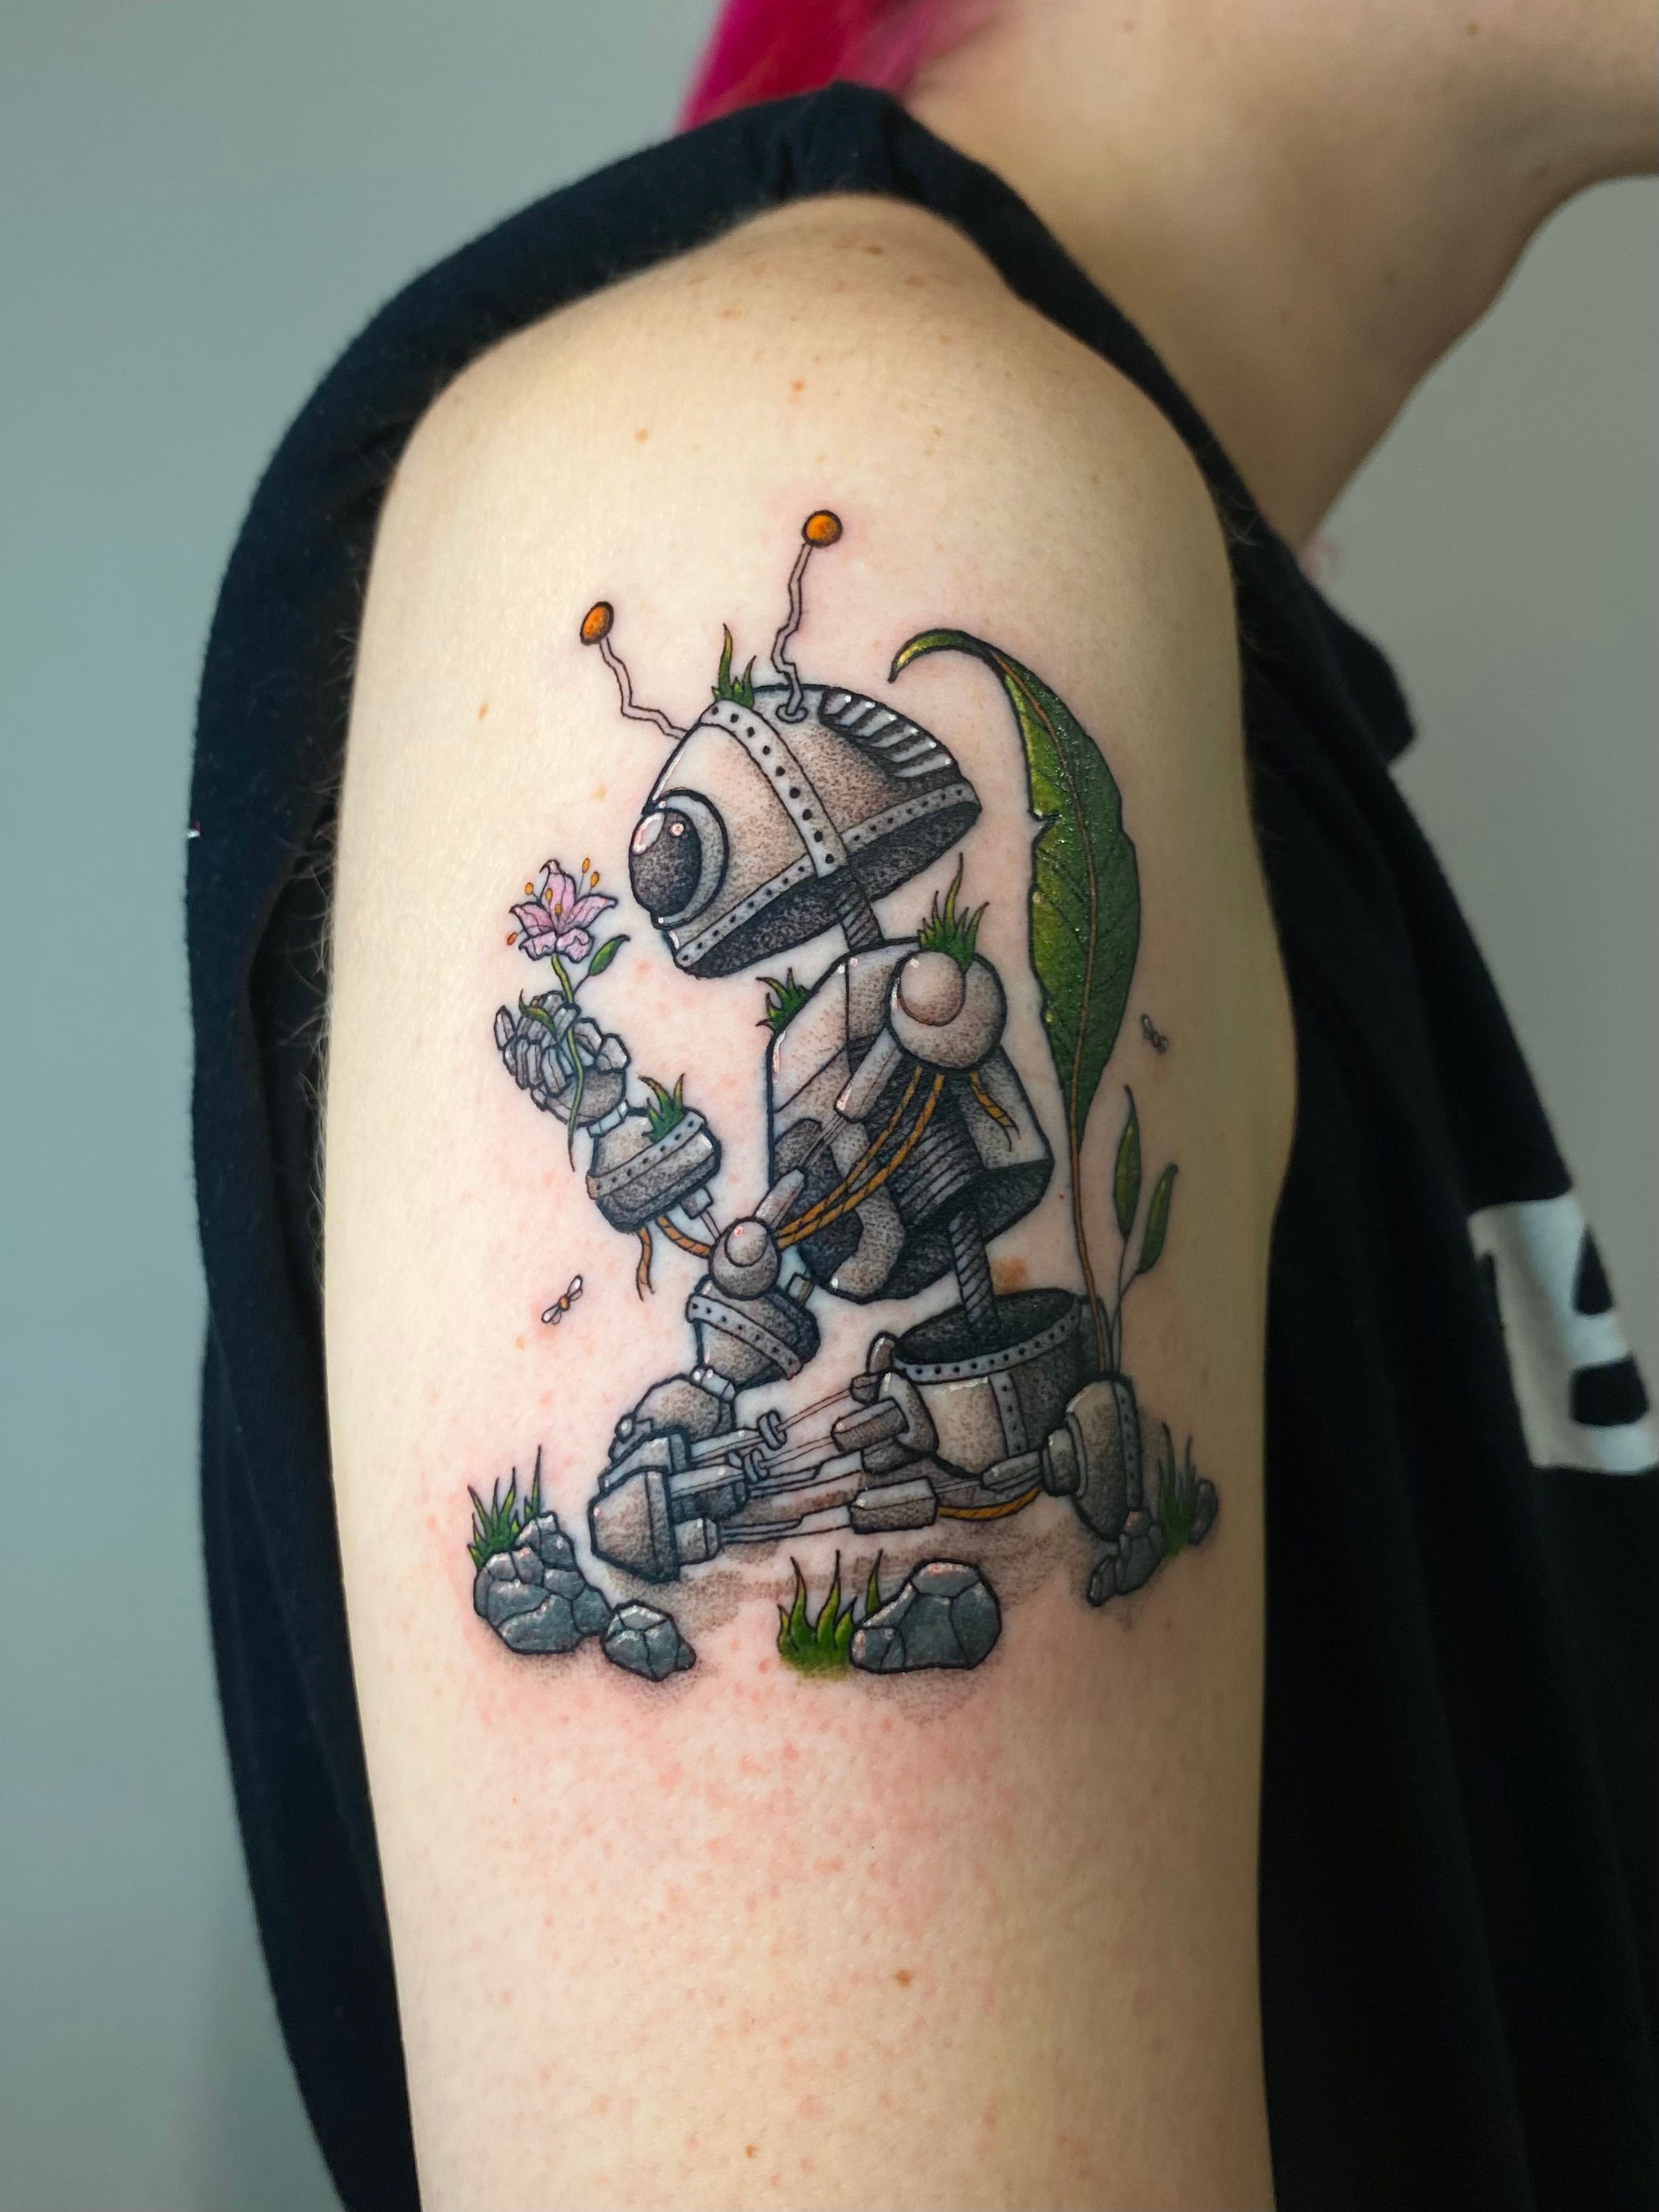 Mechanical Robot Tattoo Sticker - Bionic Electricity Body Art Waterproof  Tattoos | eBay